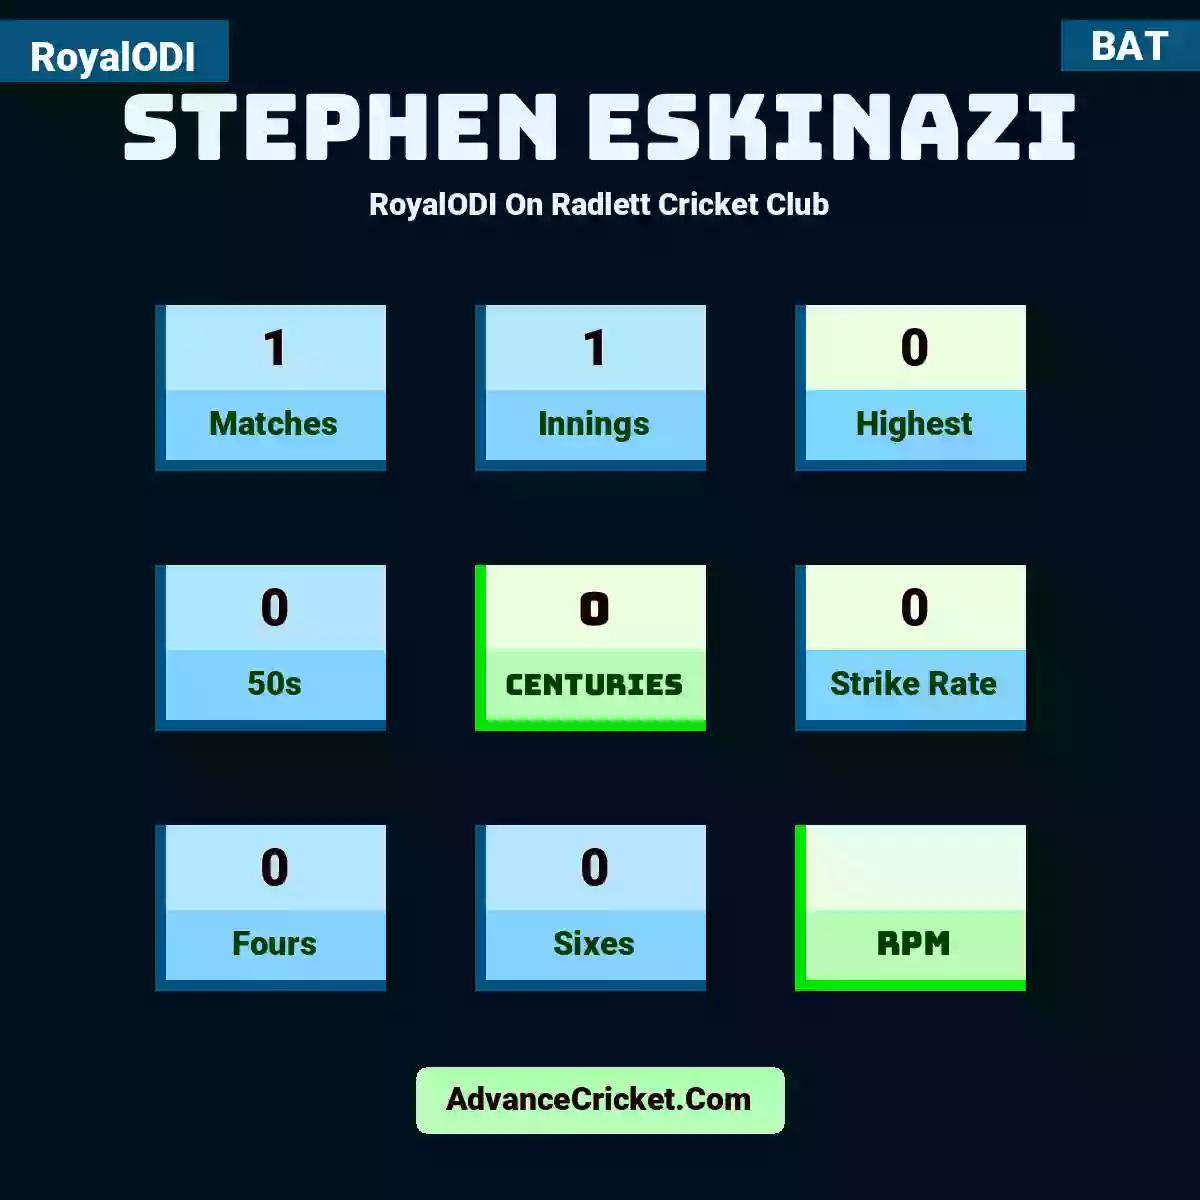 Stephen Eskinazi RoyalODI  On Radlett Cricket Club, Stephen Eskinazi played 1 matches, scored 0 runs as highest, 0 half-centuries, and 0 centuries, with a strike rate of 0. S.Eskinazi hit 0 fours and 0 sixes.